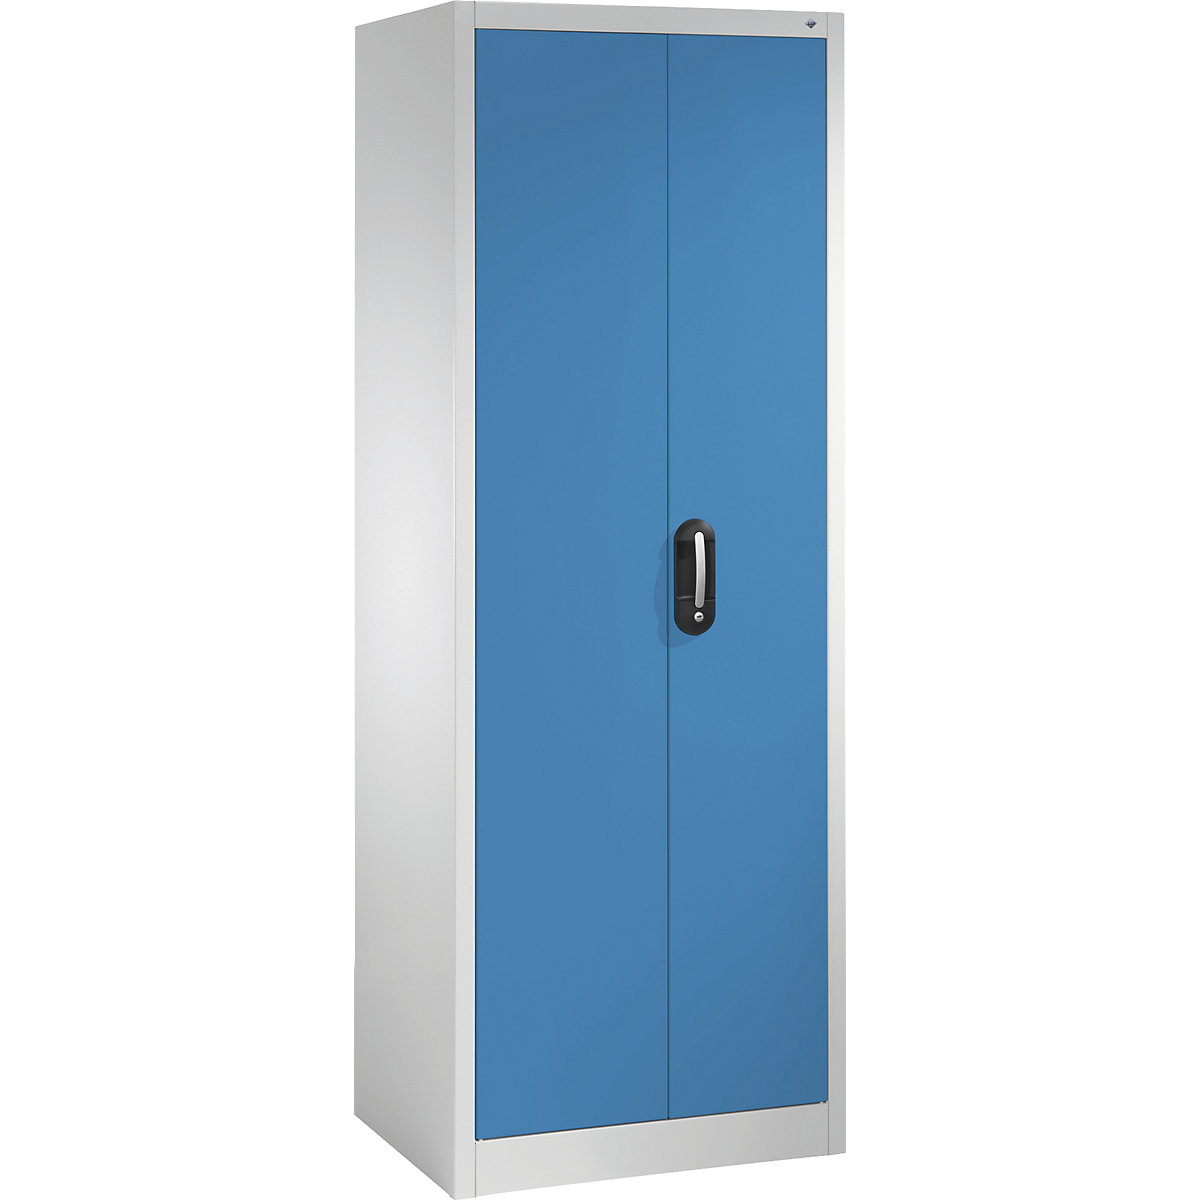 C+P – ACURADO universal cupboard, WxD 700 x 500 mm, light grey / light blue